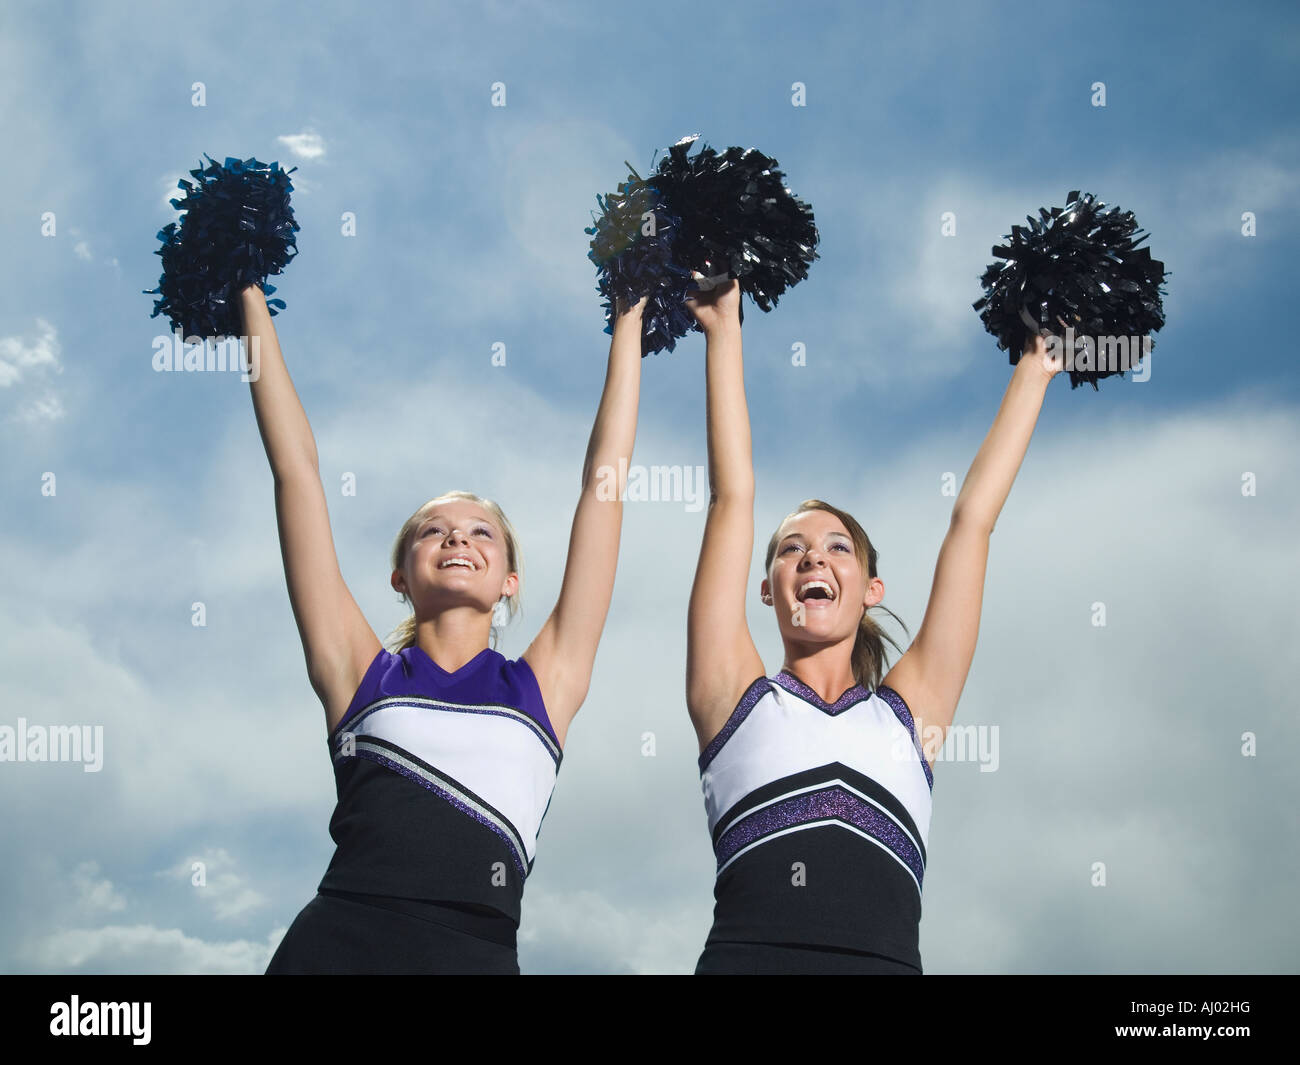 Two cheerleaders holding pom poms over head Stock Photo